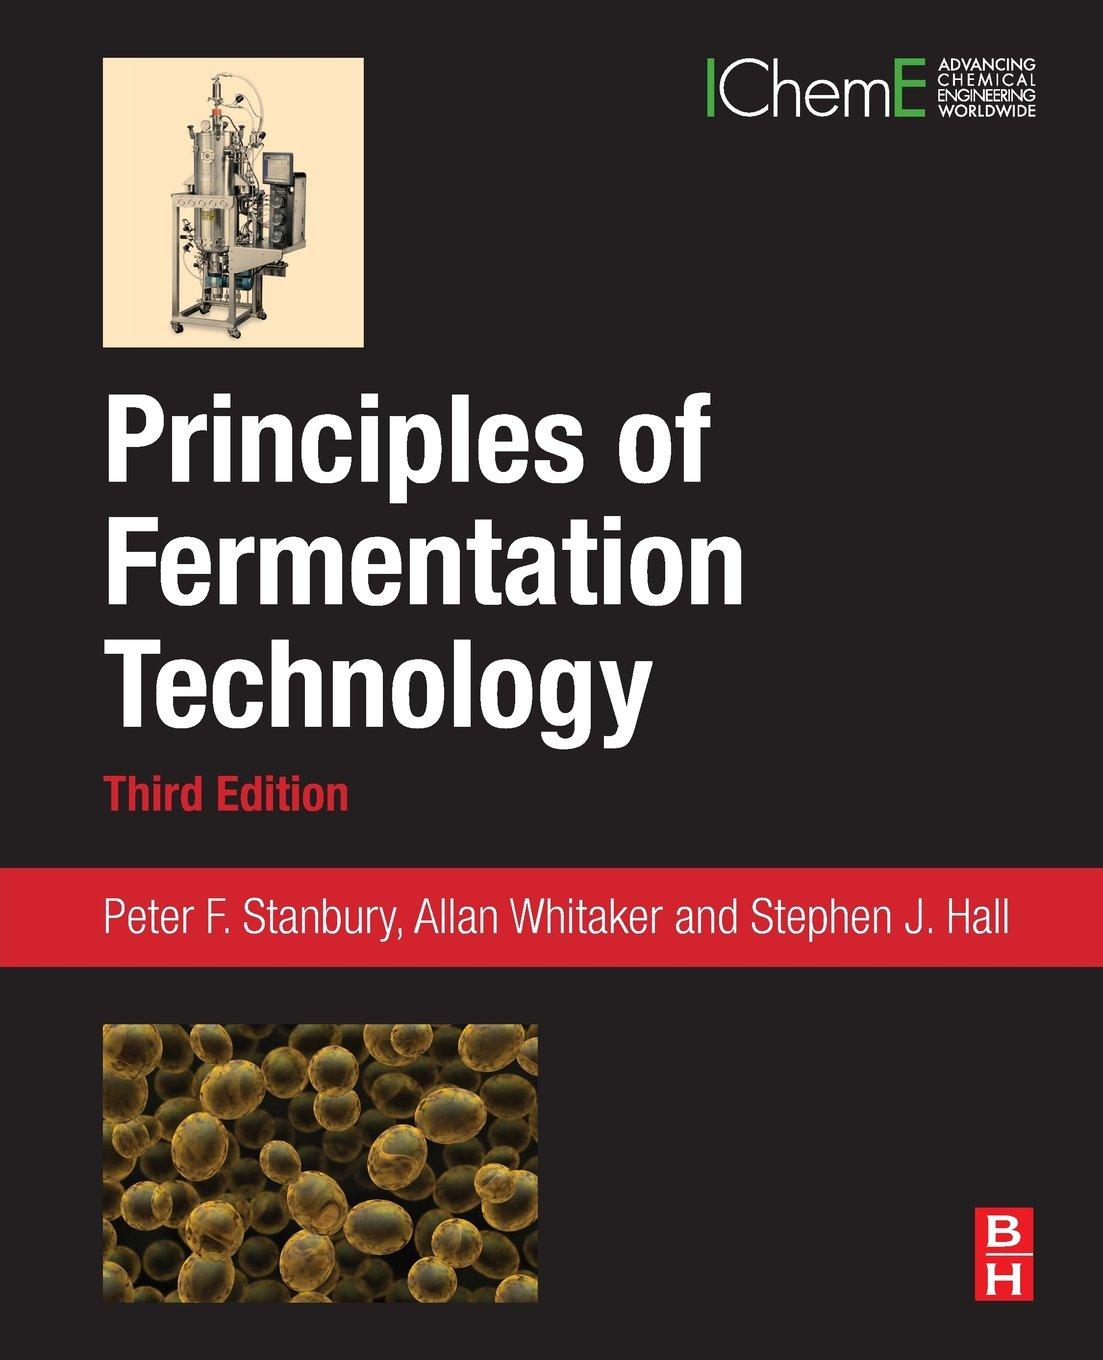 principles of fermentation technology 3rd edition peter f stanbury, allan whitaker, stephen j hall